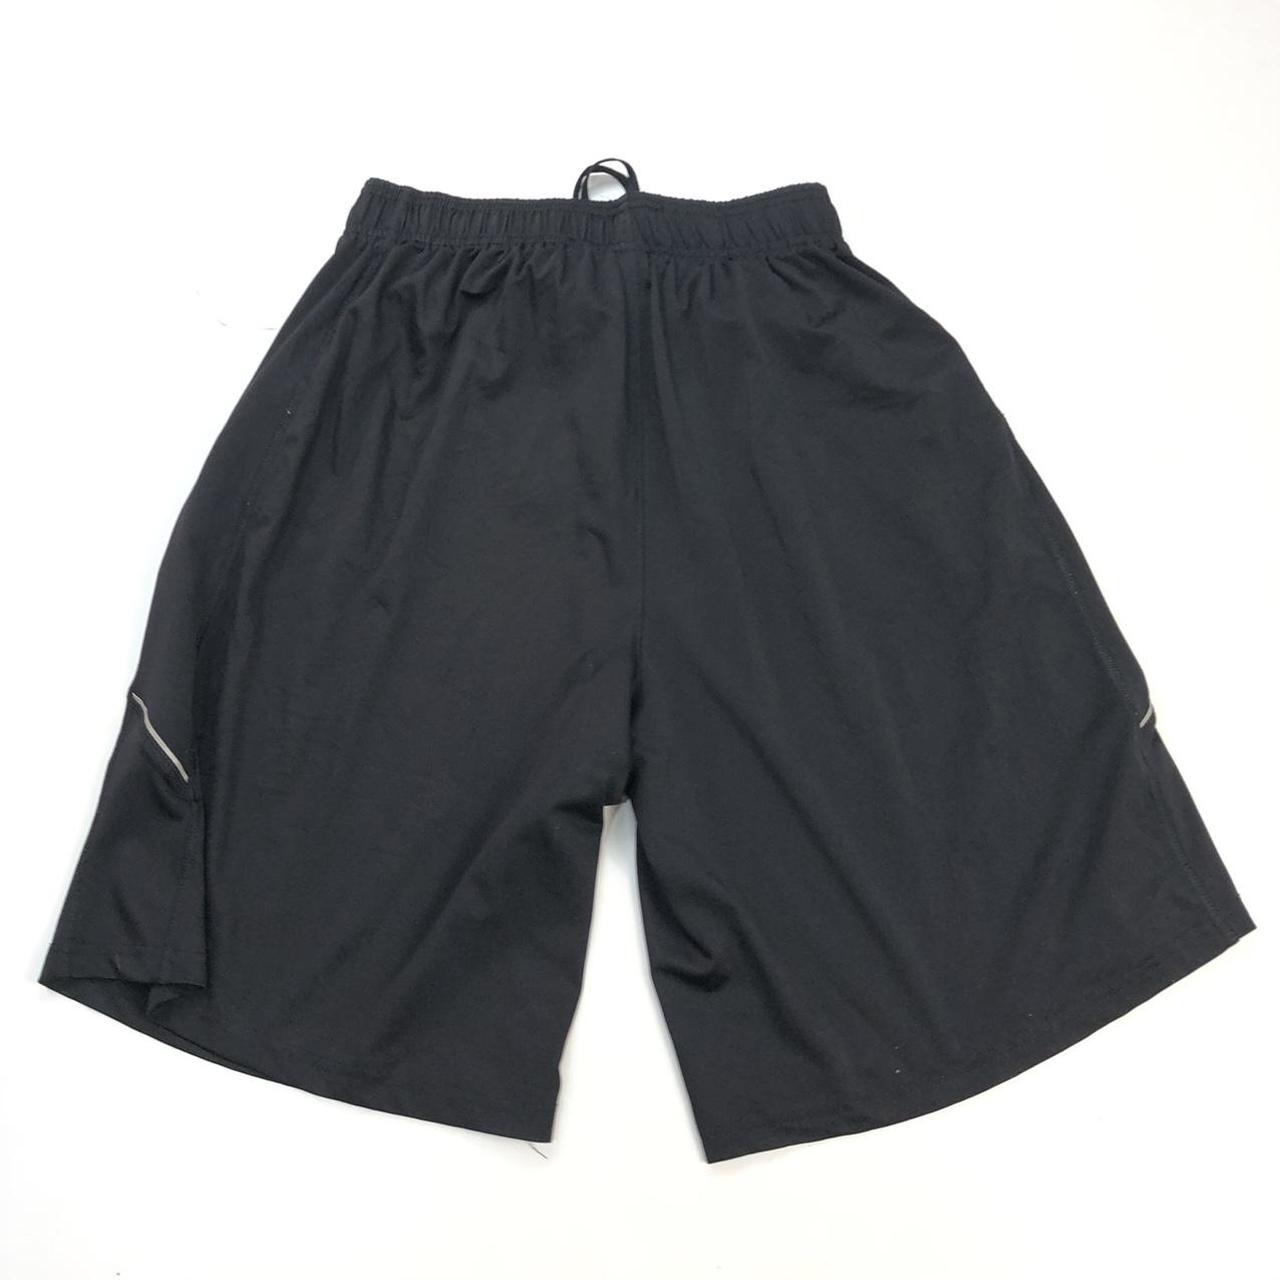 BLACK REEBOK SHORTS Sport Shorts with logo,... - Depop